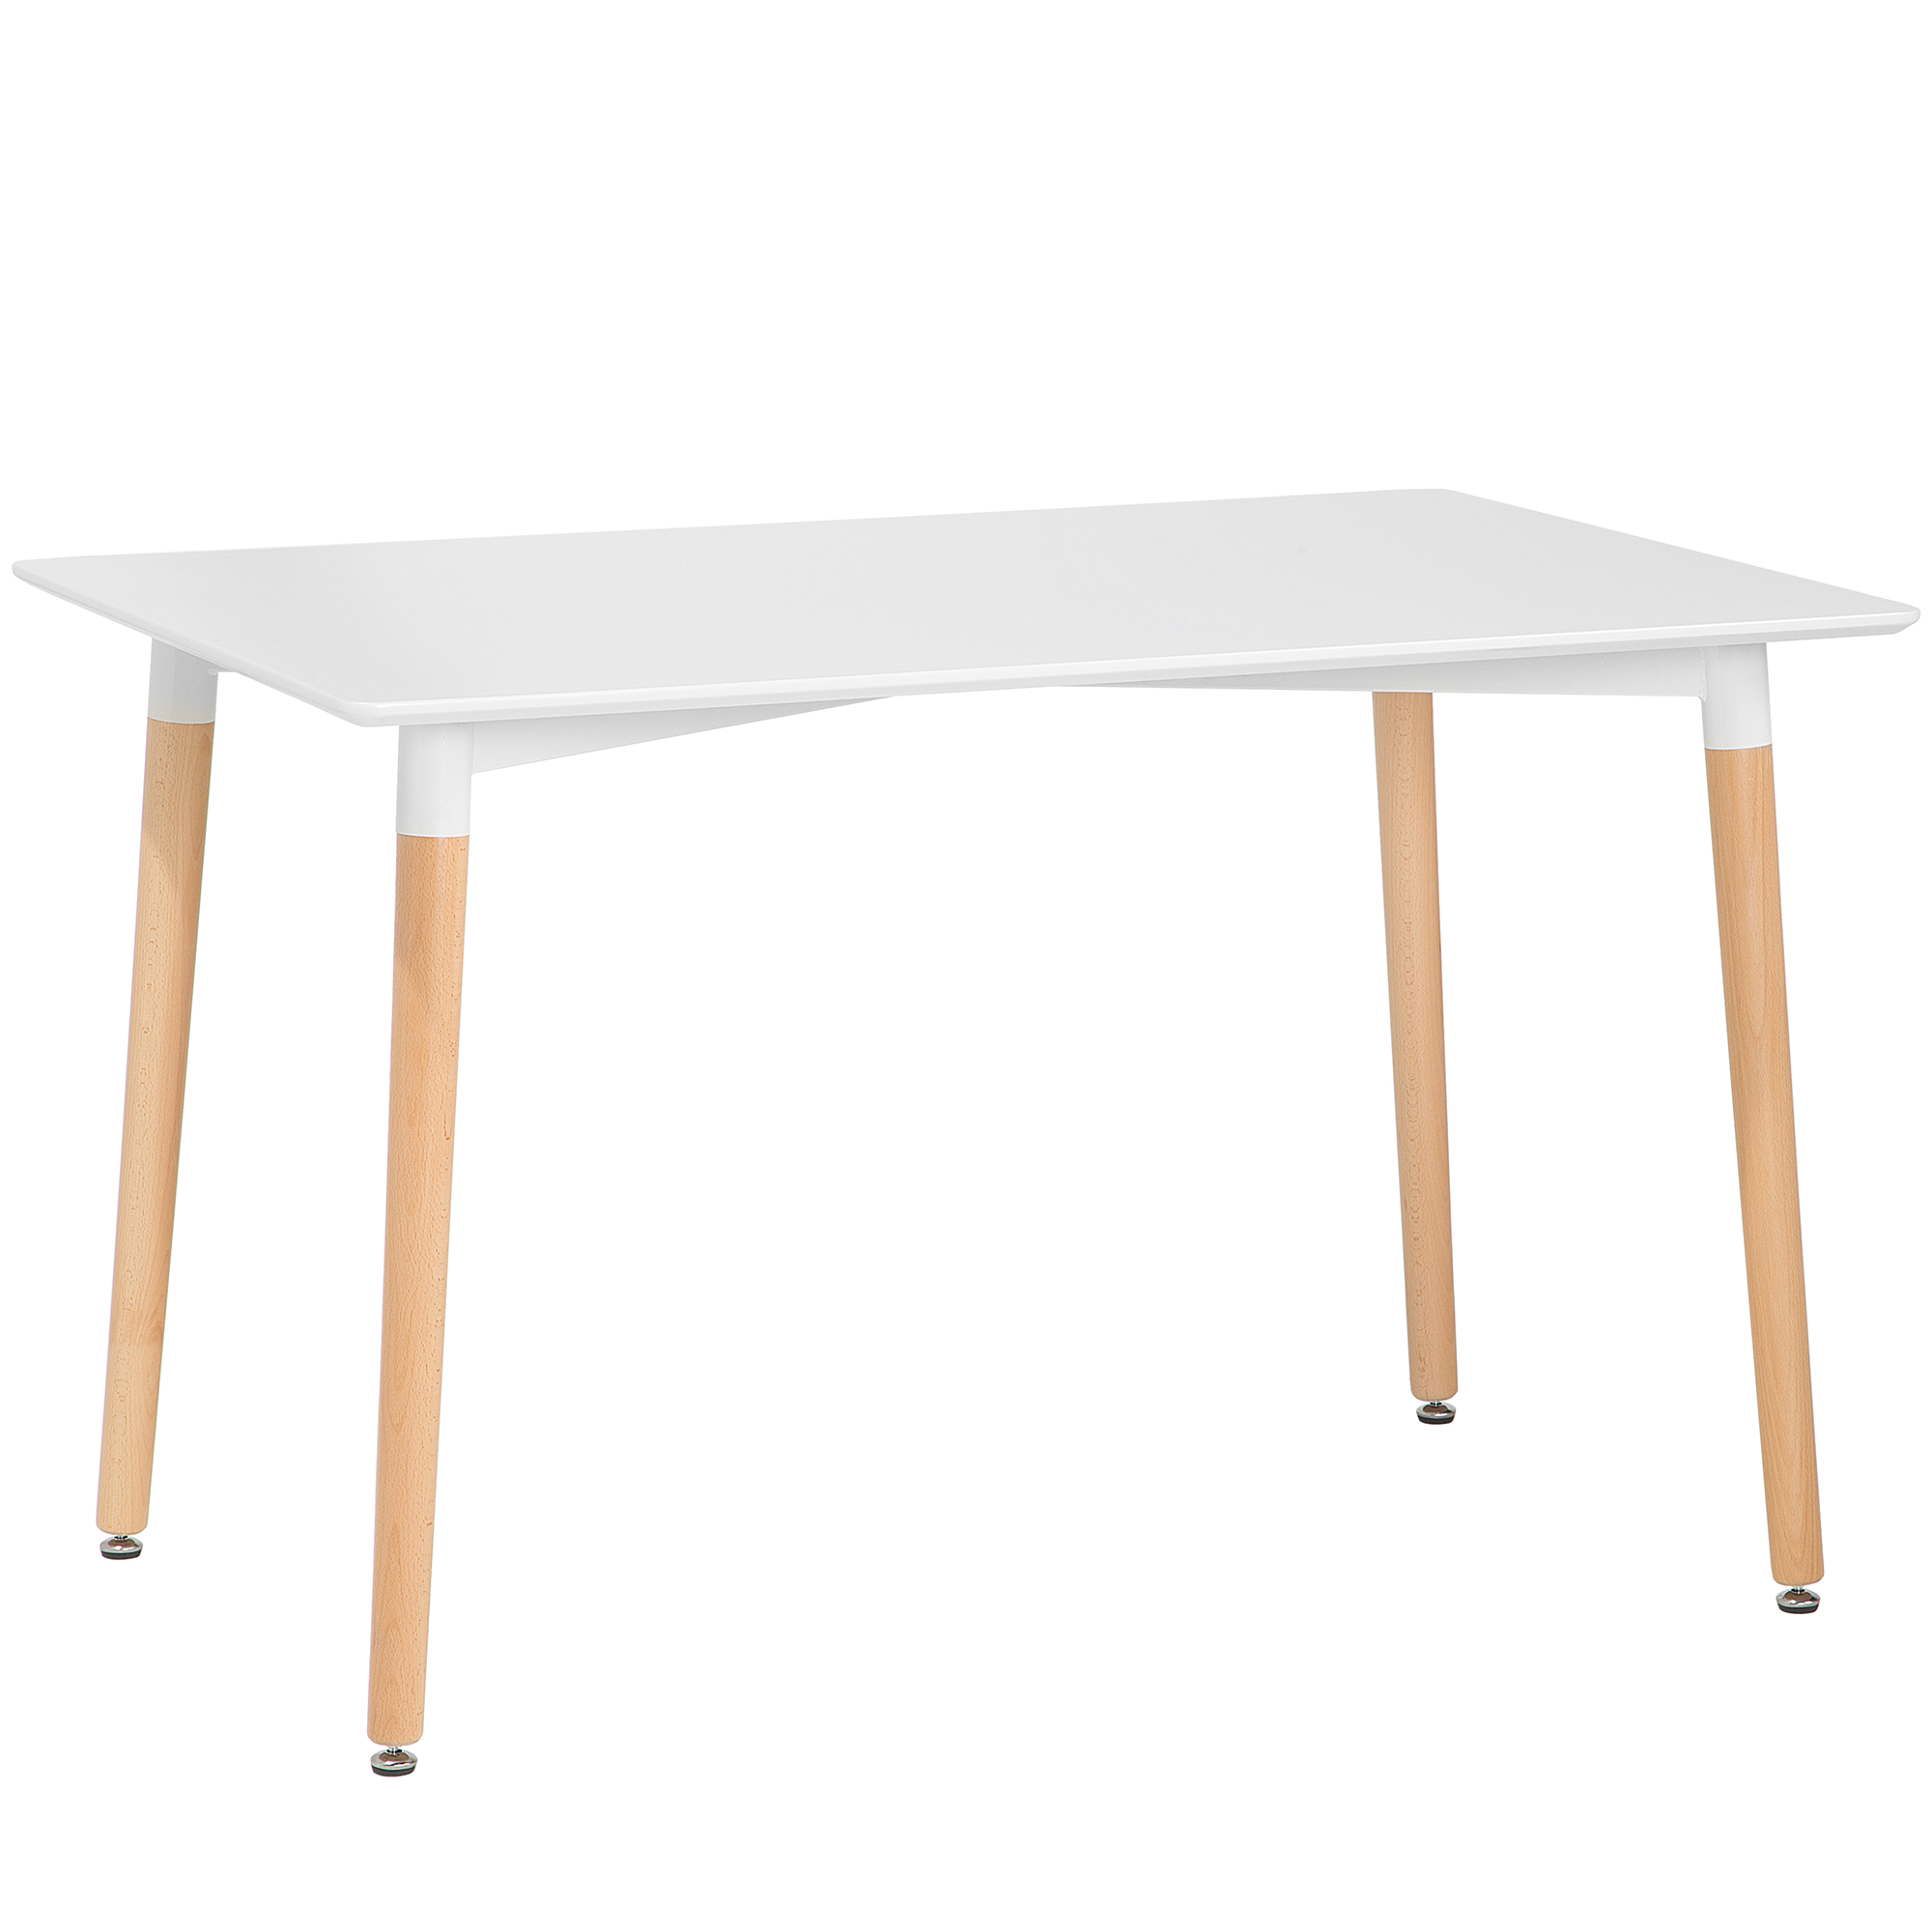 Beliani Dining Table White and Light Wood 120 x 80 cm Rectangular Modern